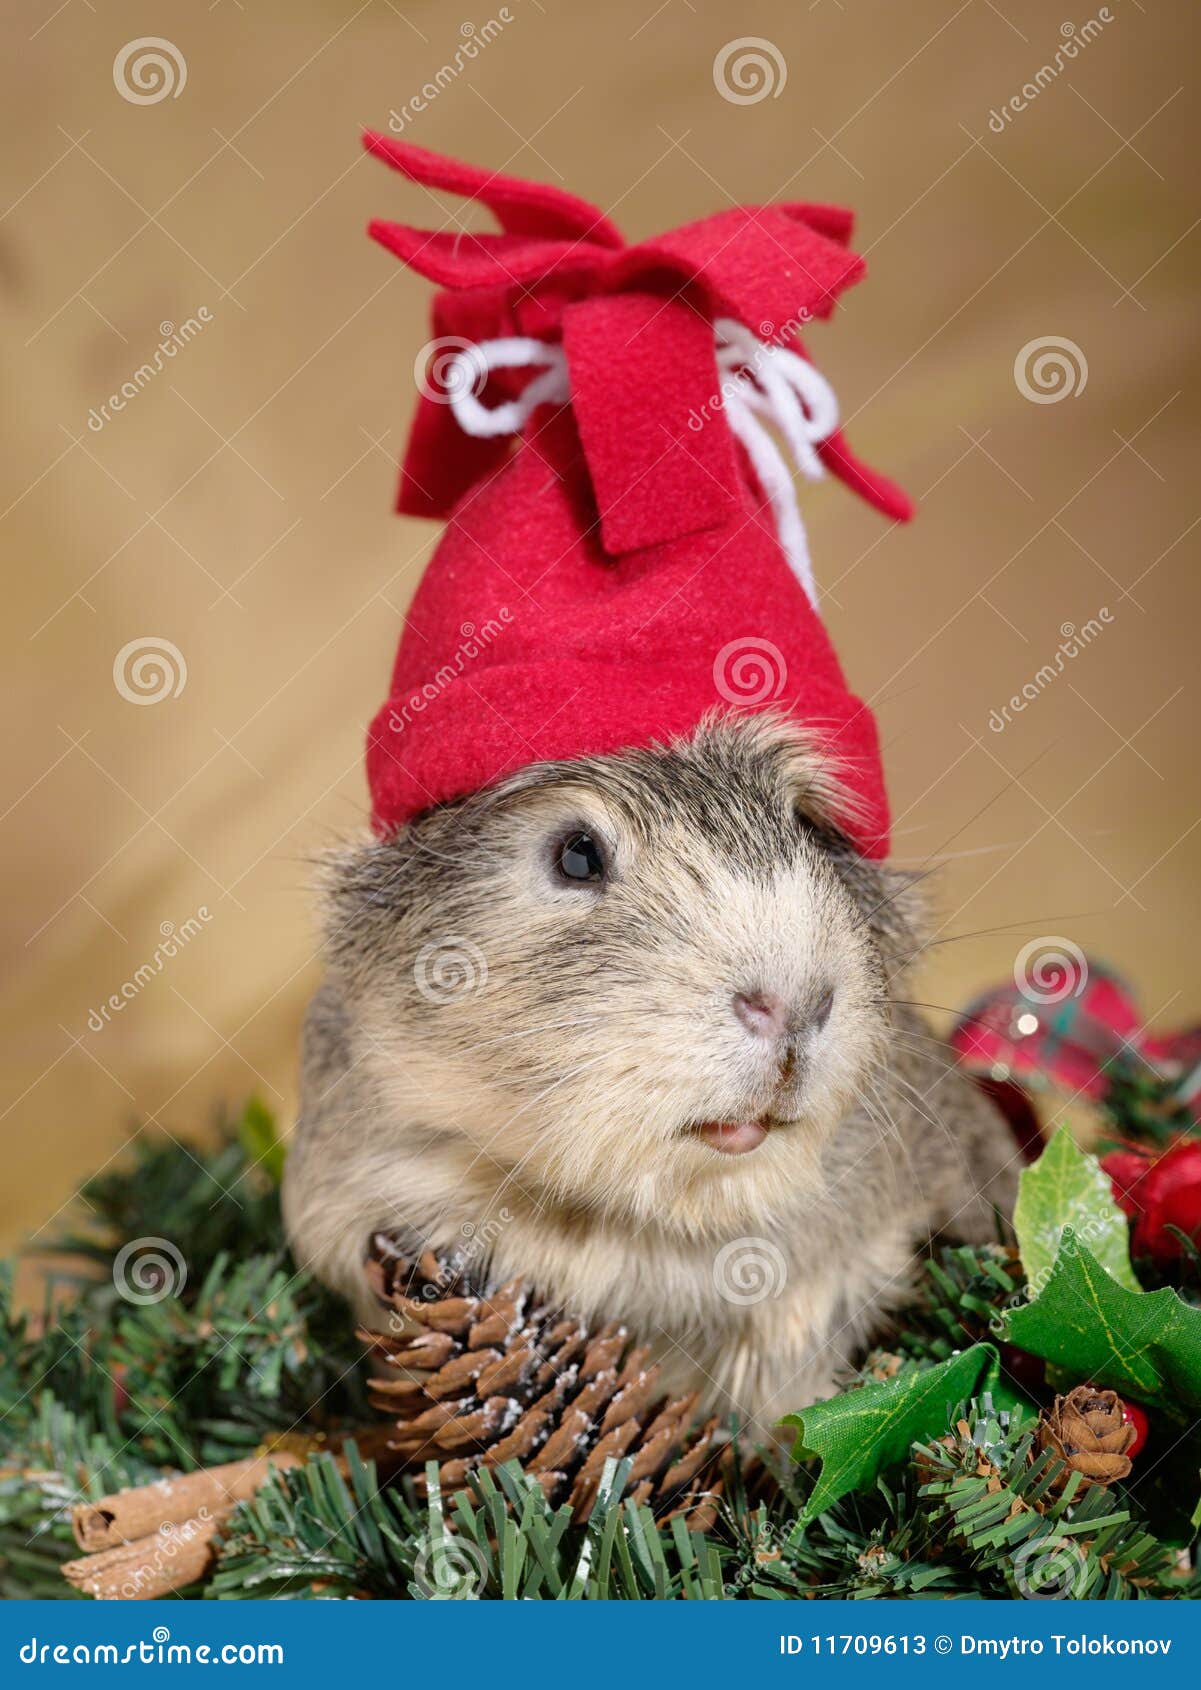 Funny Cavia on the christmas garland as Santa or dwarf.